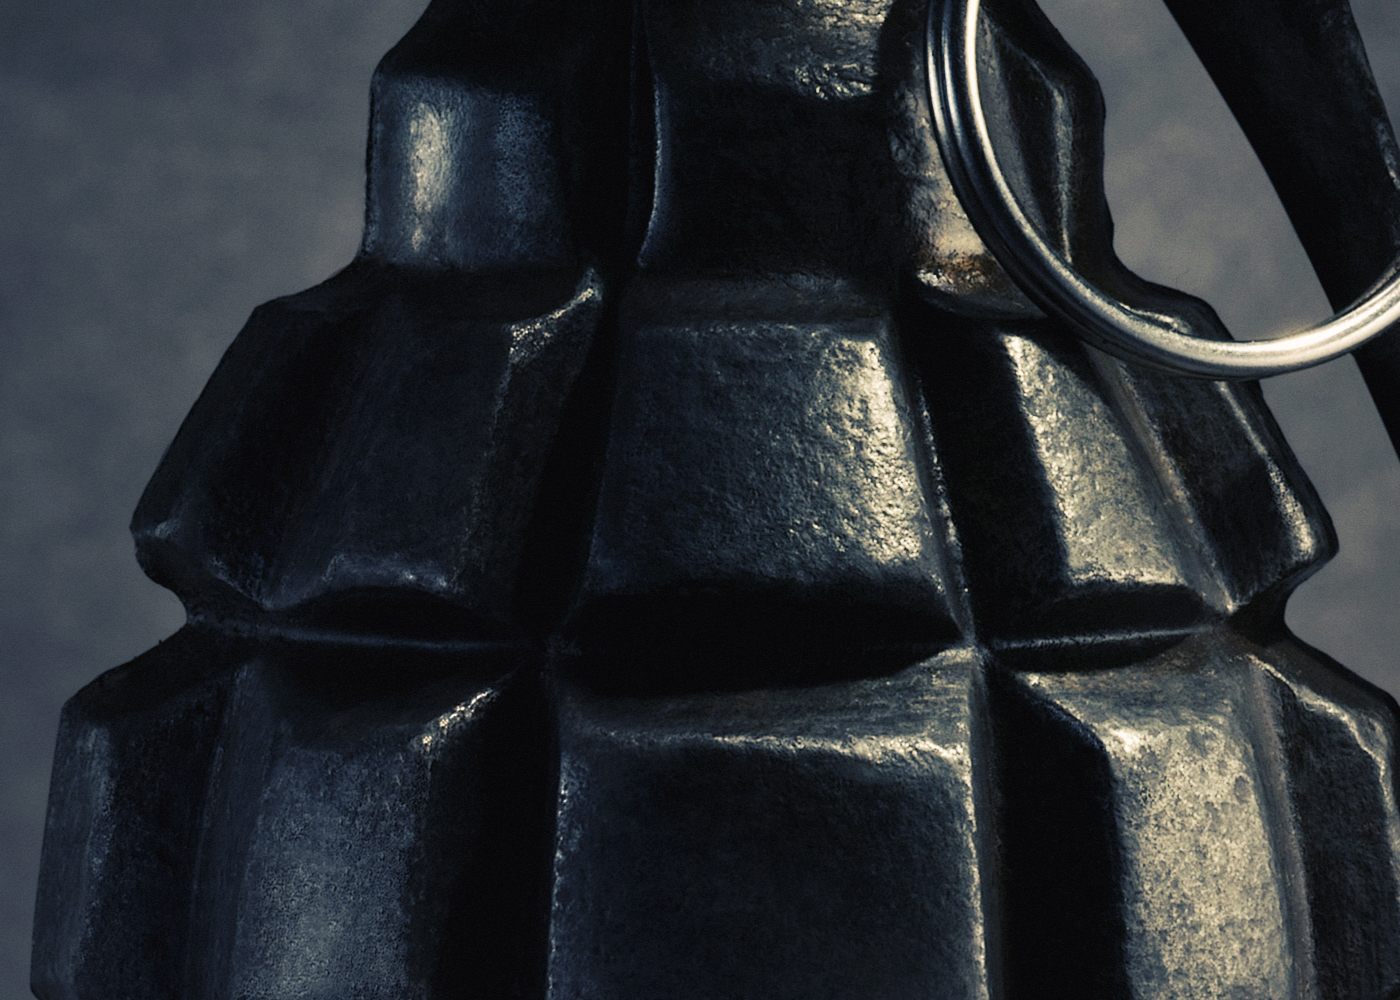 Grenade detail dark black subtle colour